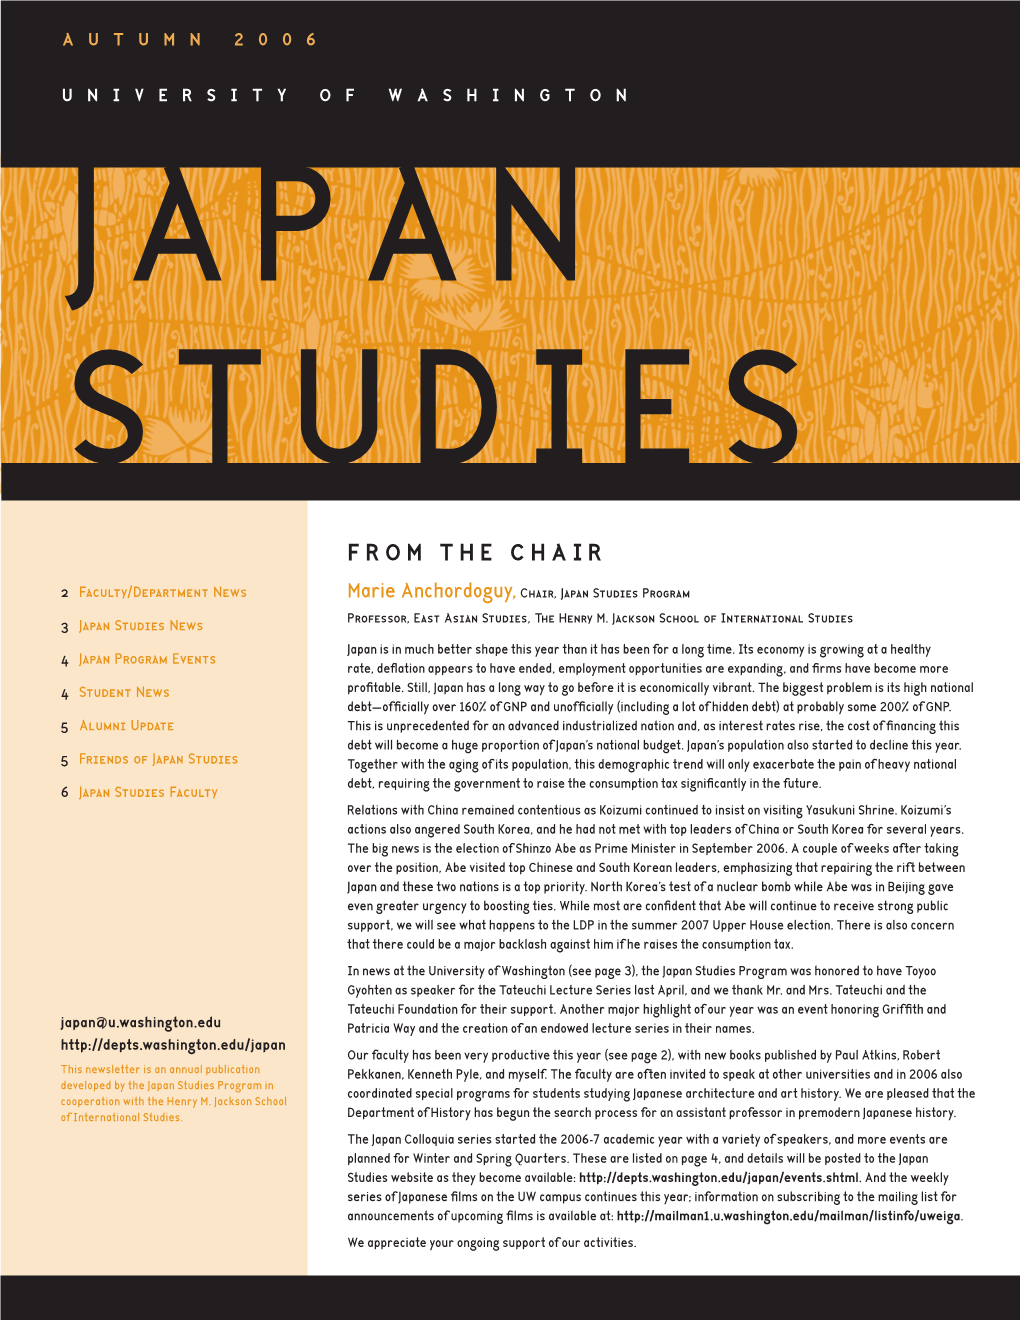 Japan Studies News Professor, East Asian Studies, the Henry M